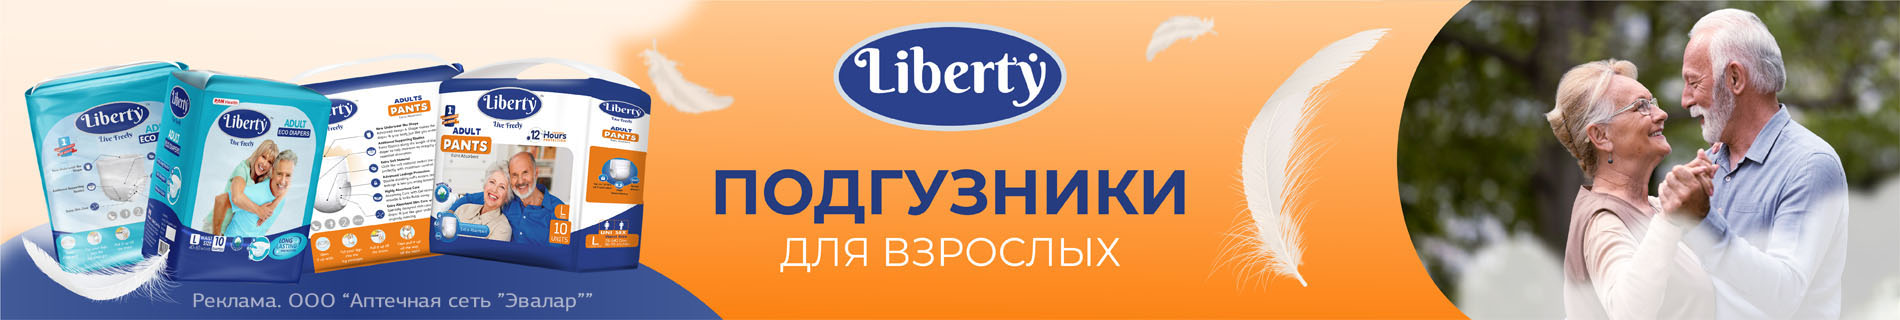 Liberty_Adault